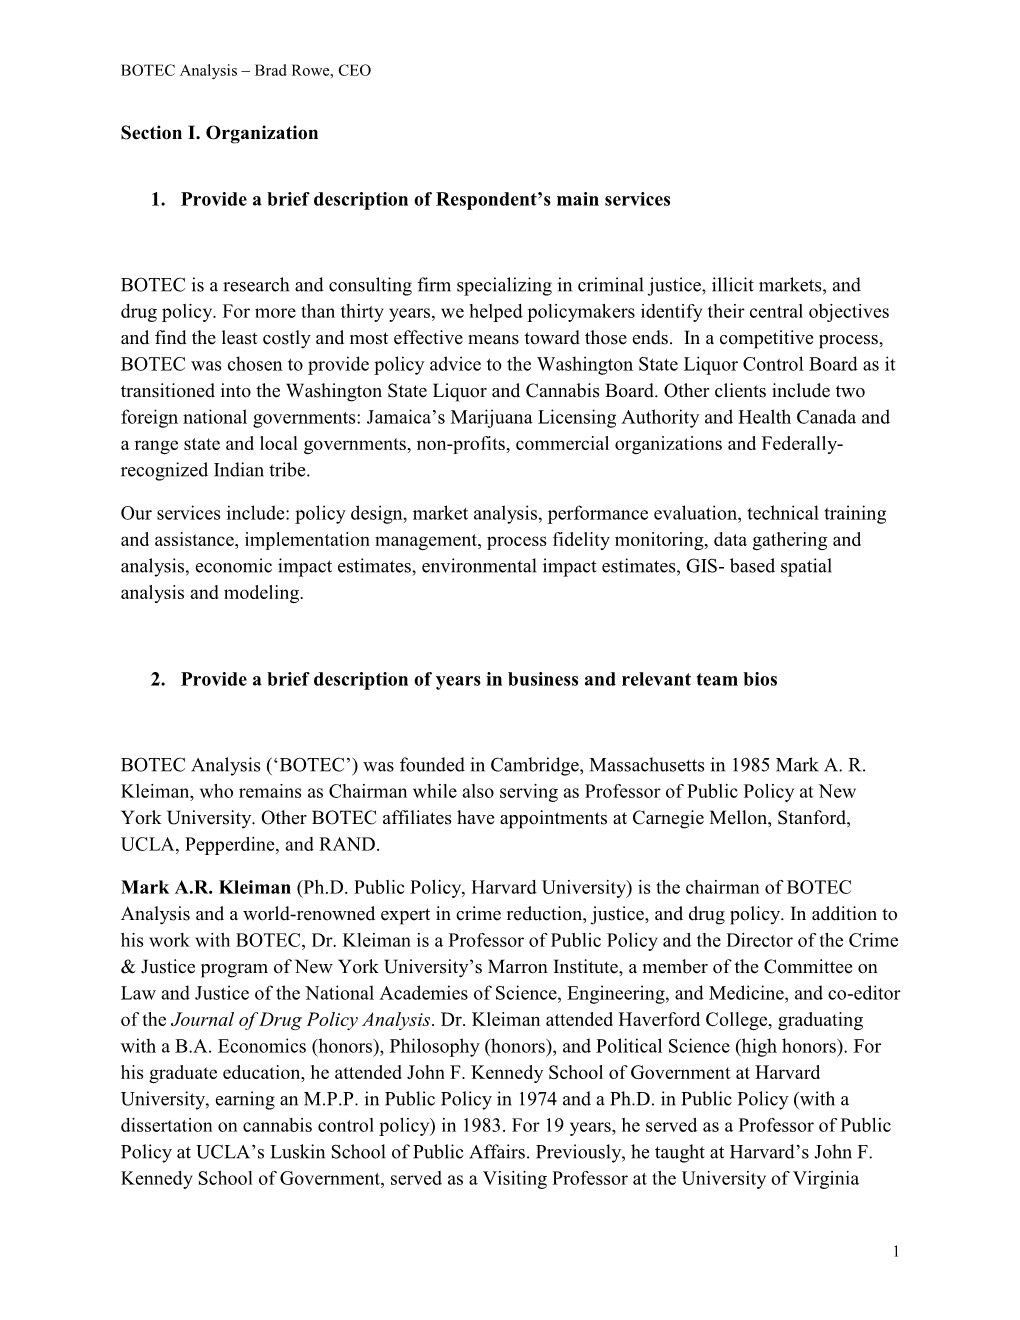 Section I. Organization 1. Provide a Brief Description of Respondent's